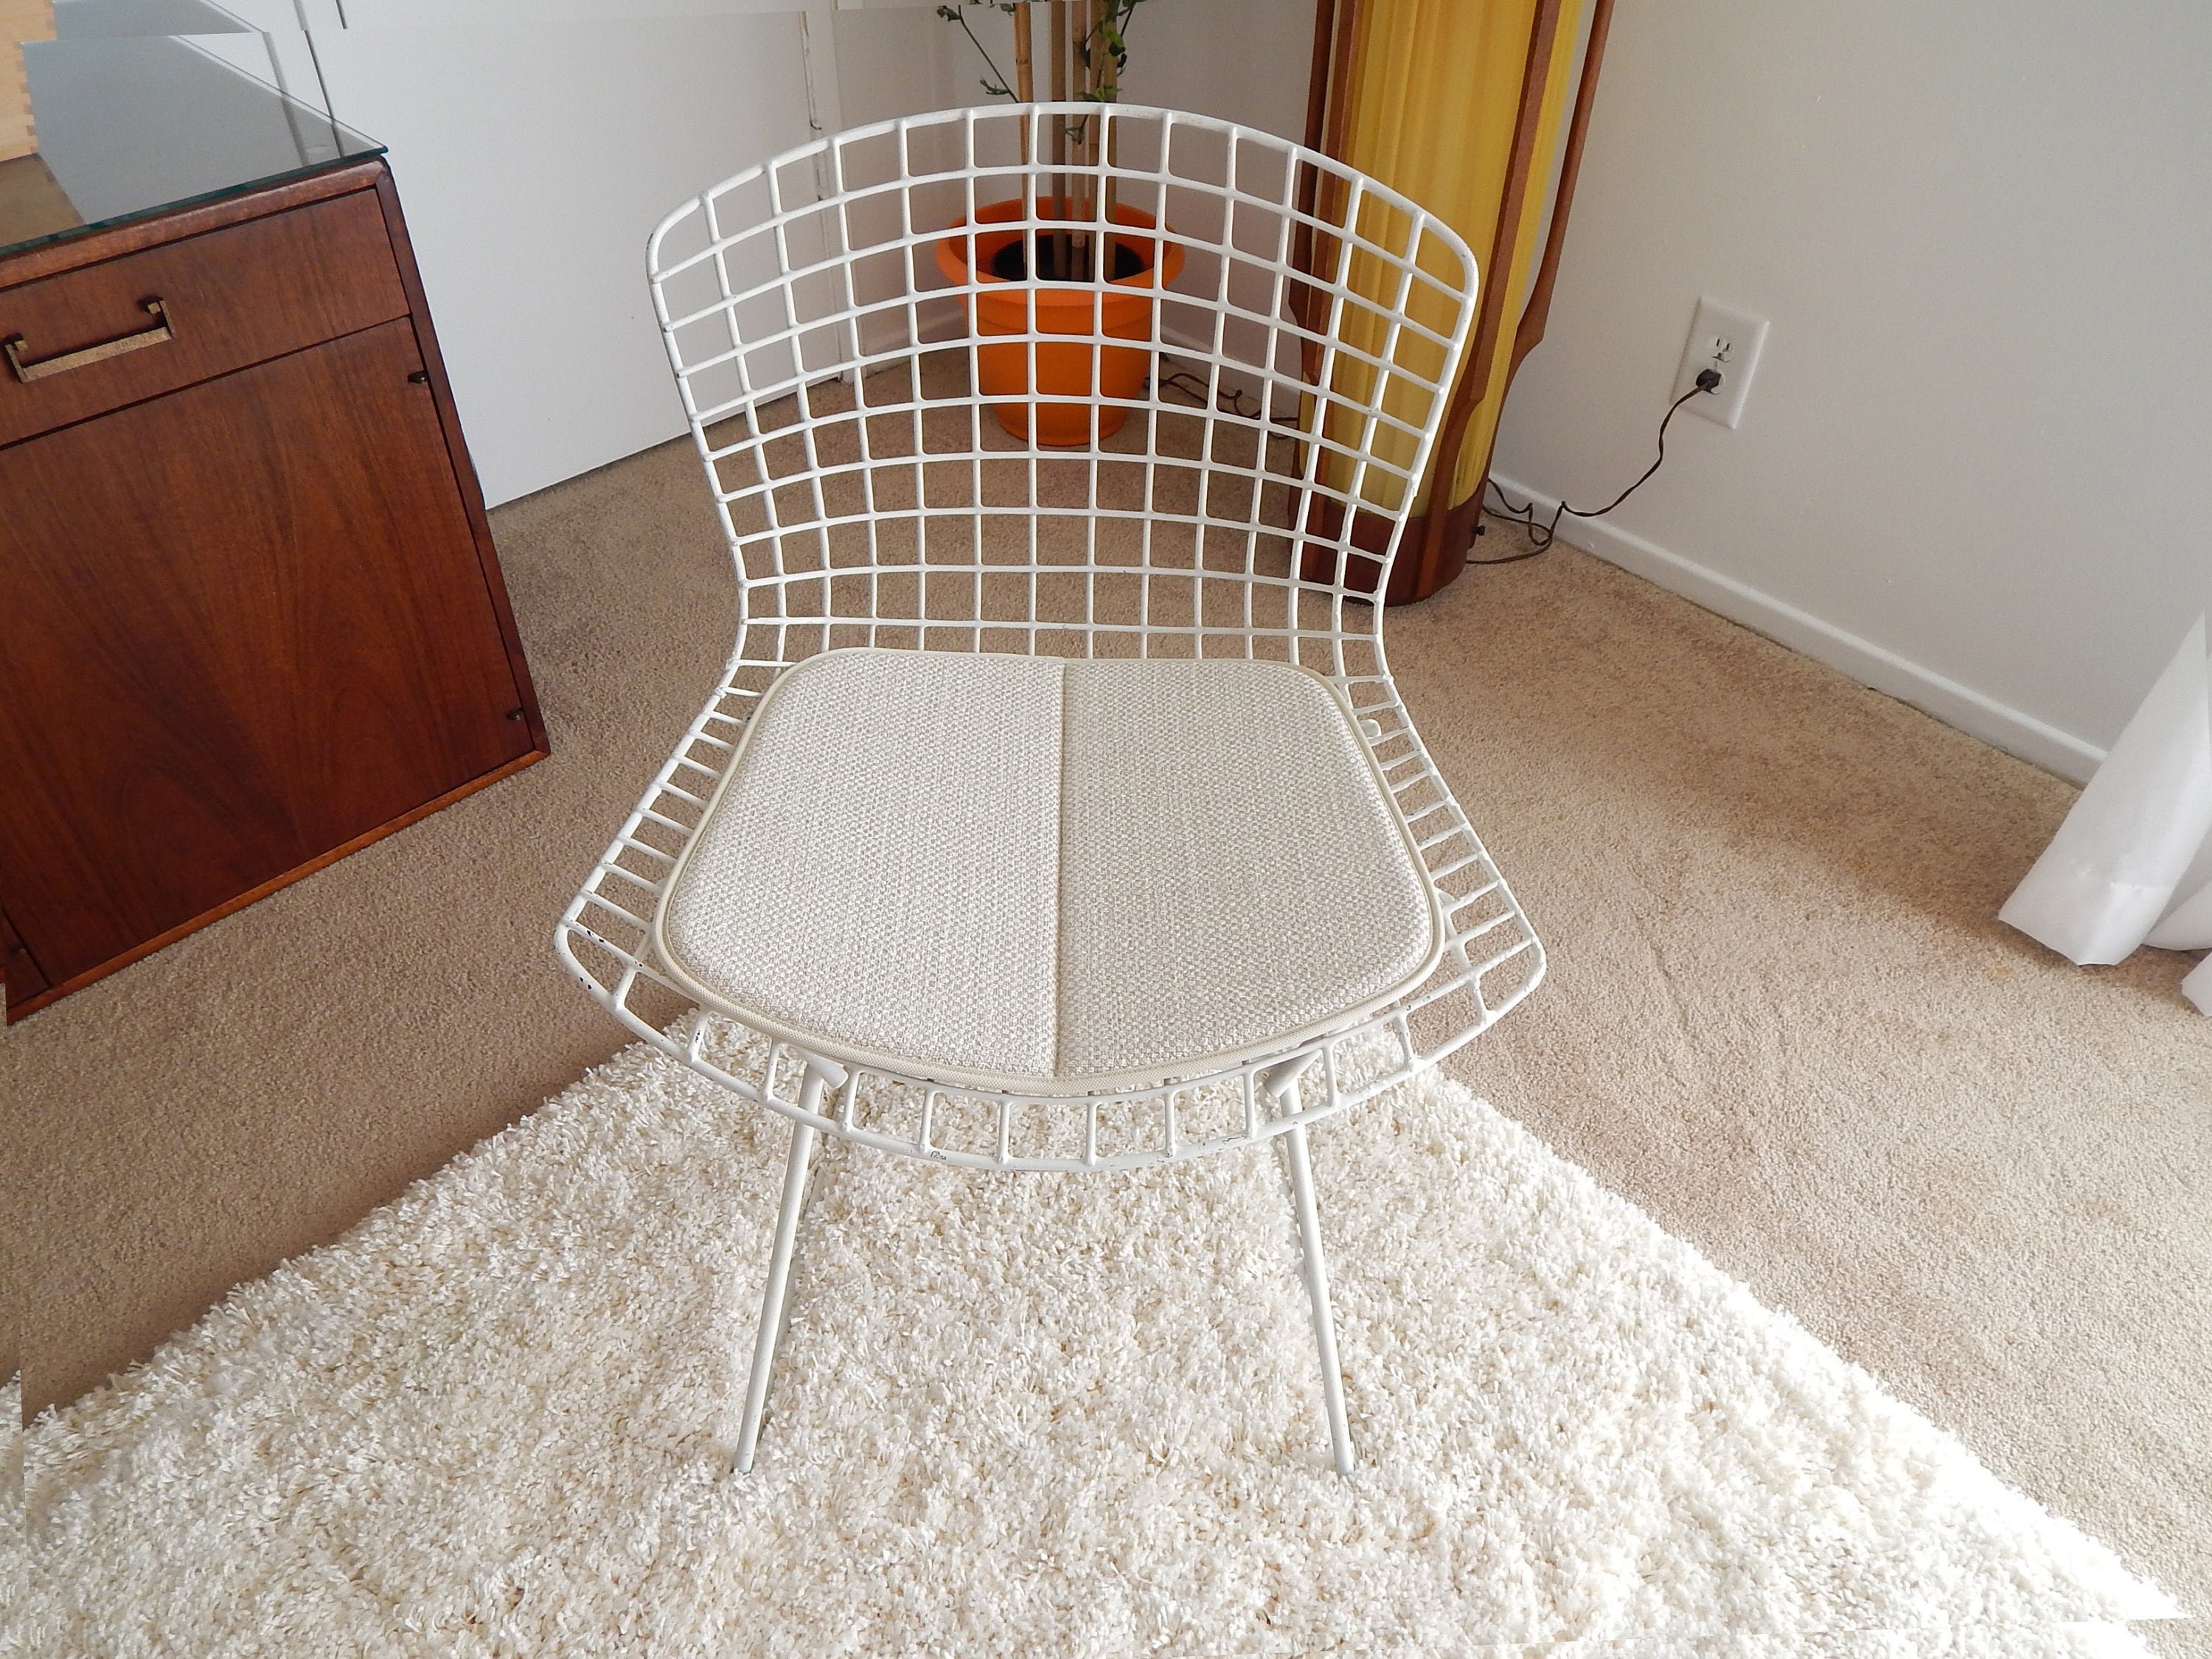 Bertoia Side Chair with Full Cover - Original Design